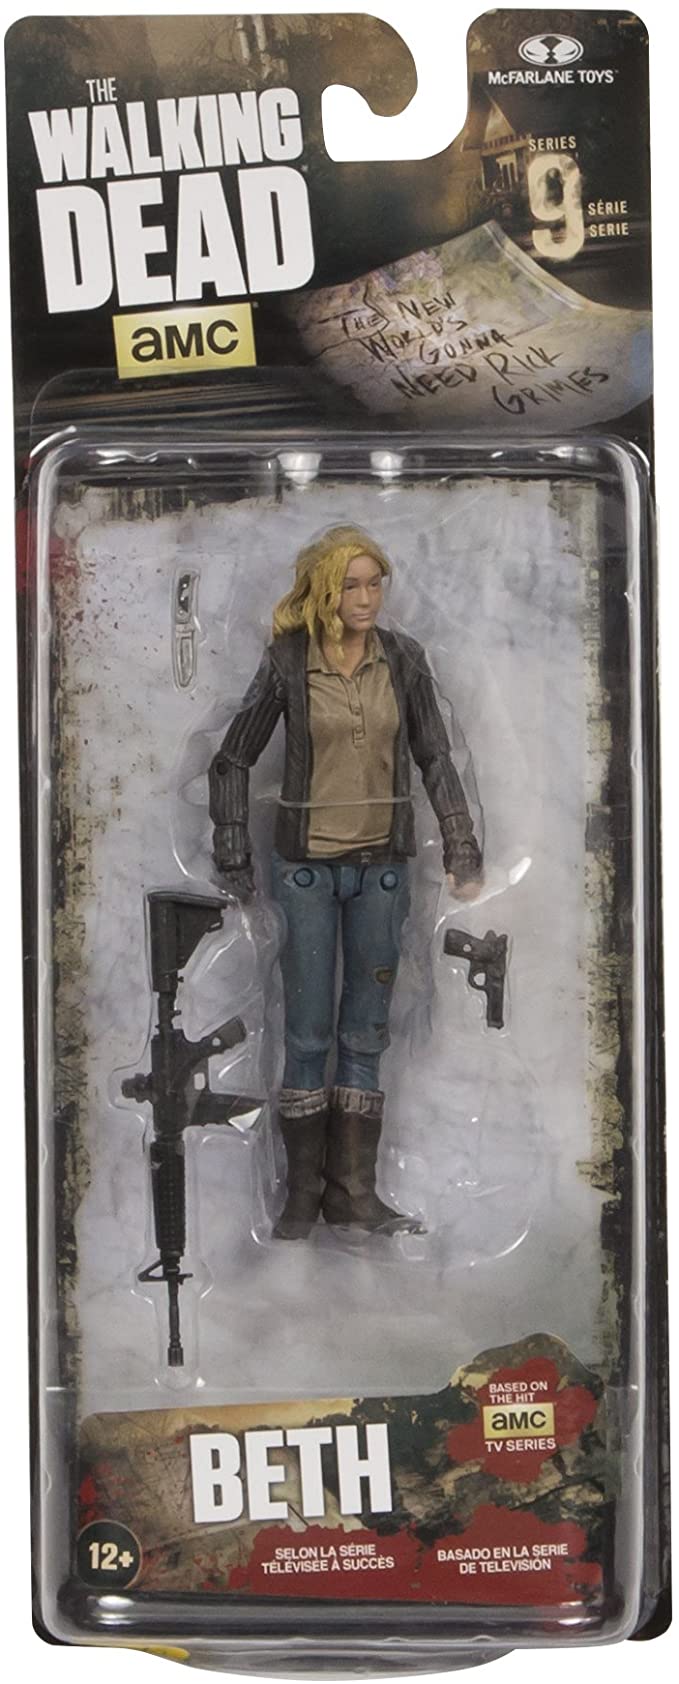 The Walking Dead AMC TV Series 9 Beth Greene Action Figure